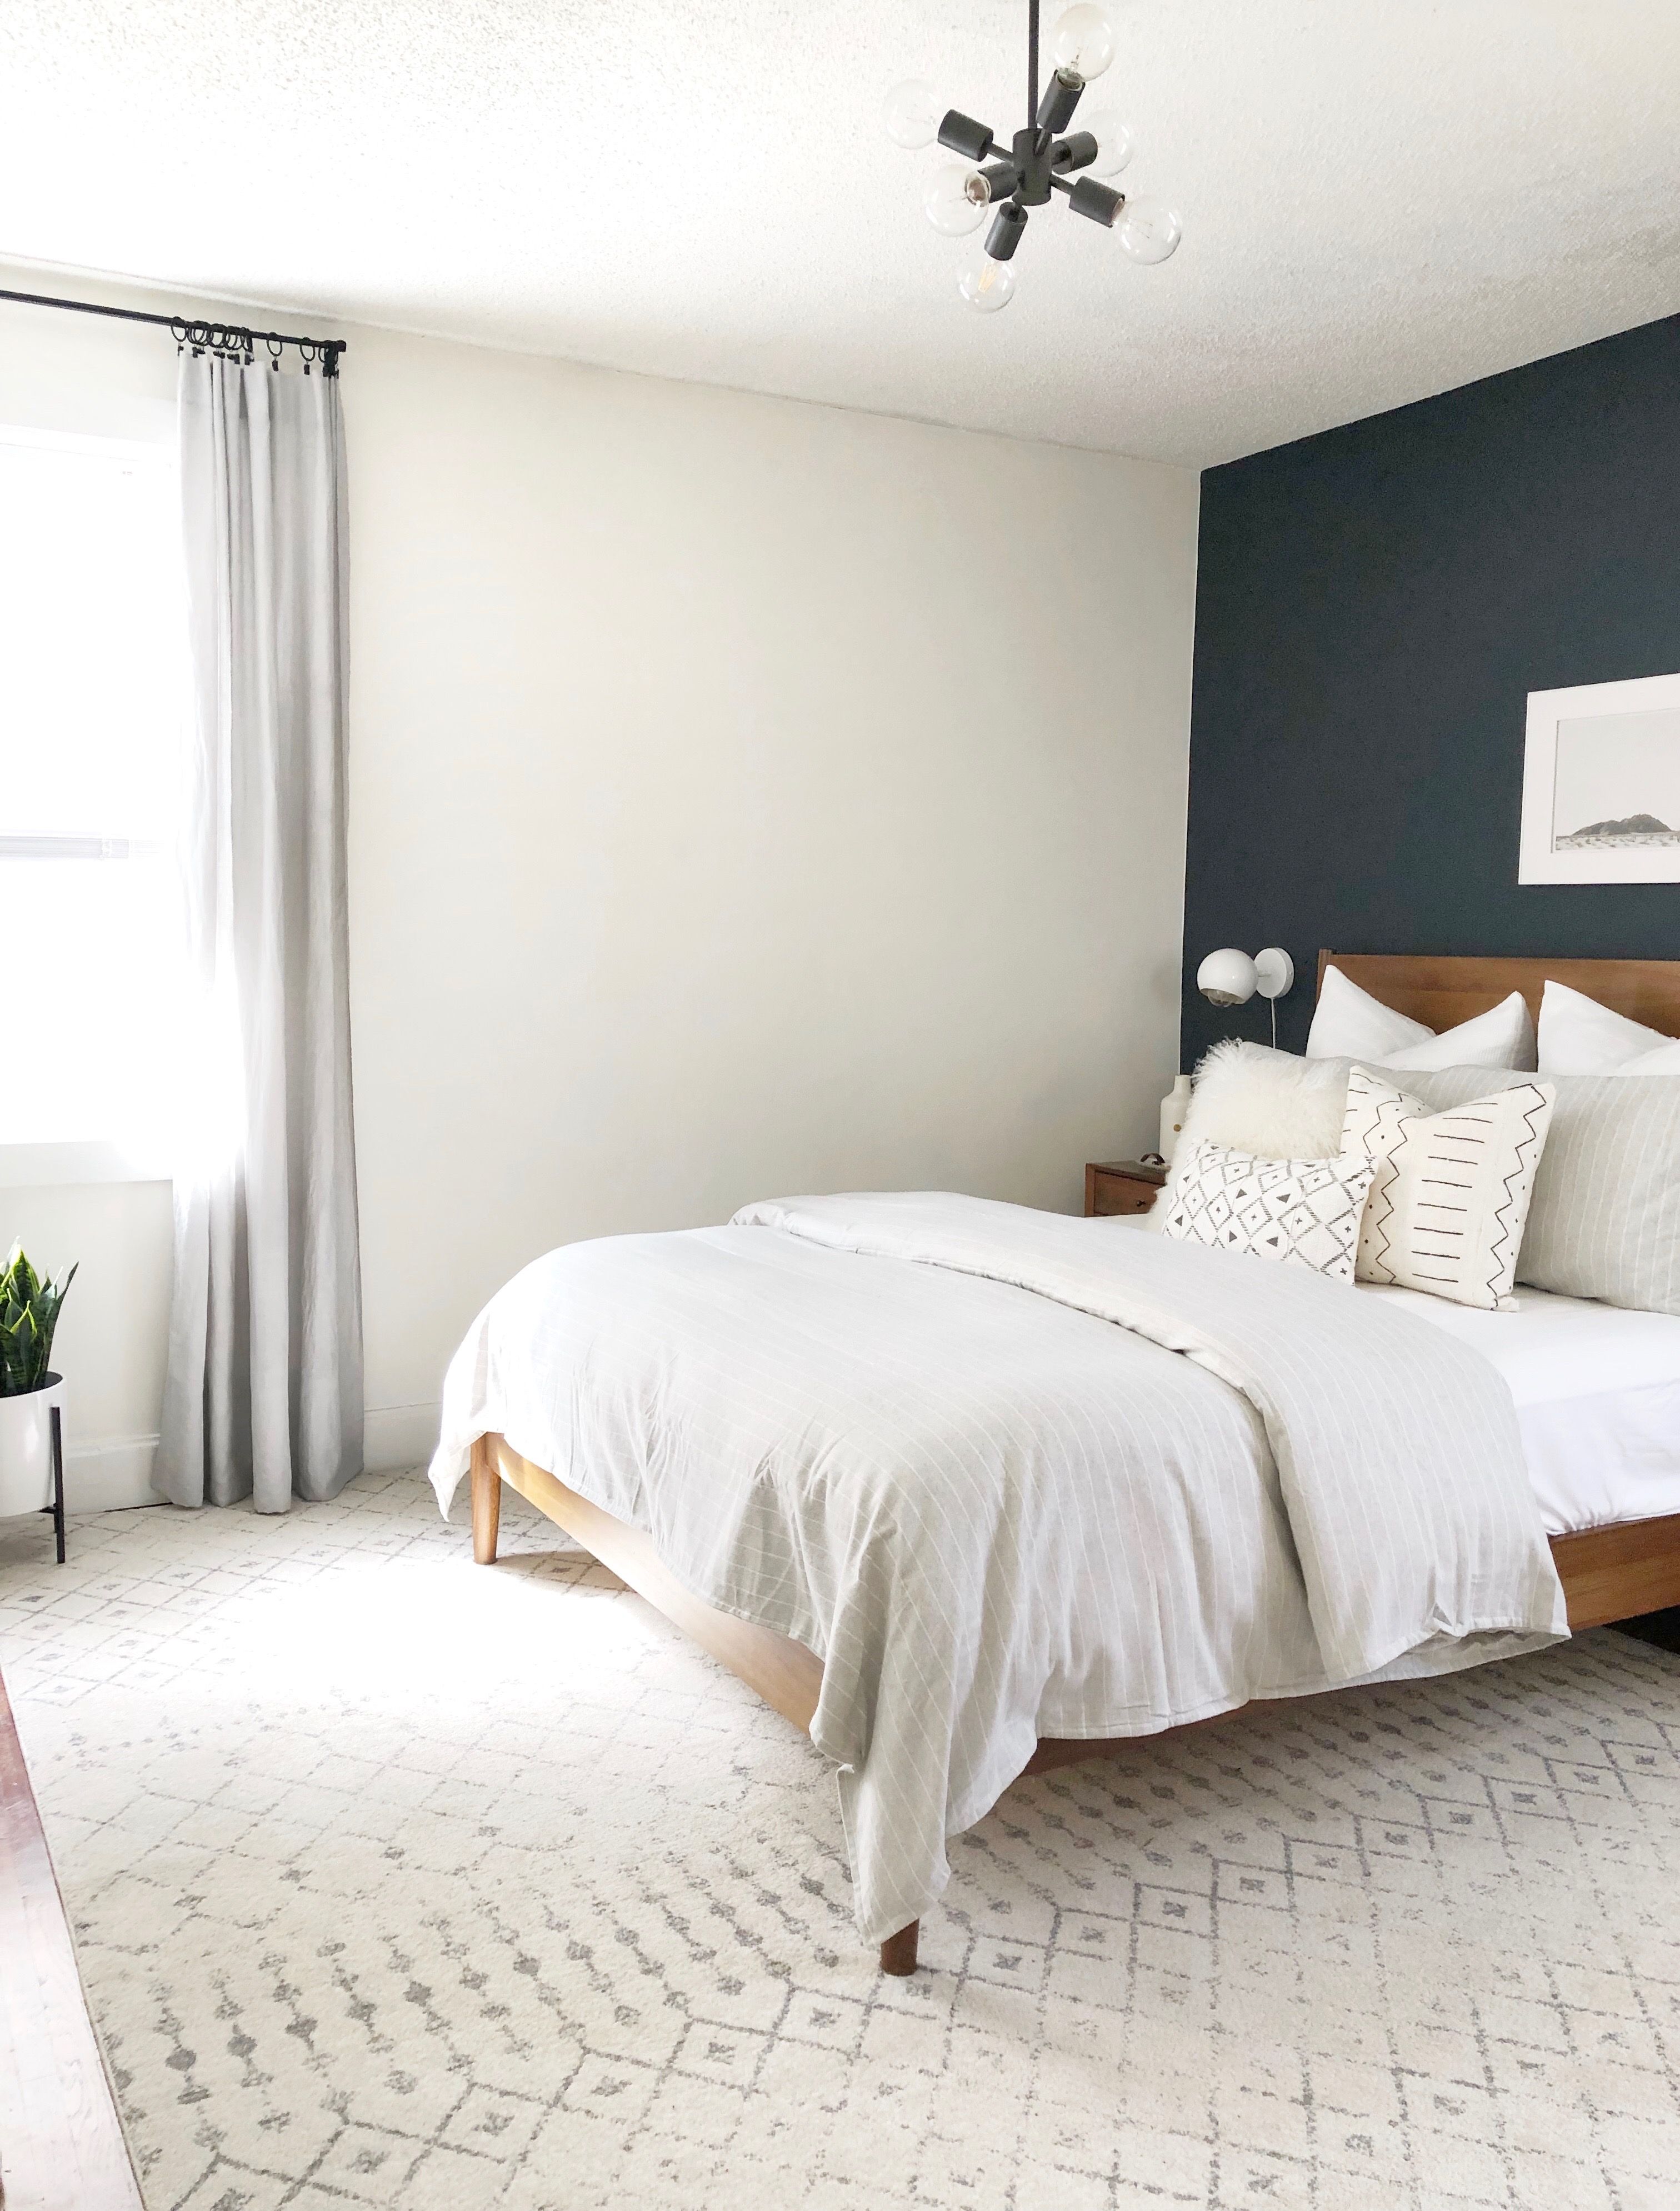 Subtle Sophistication: Using Neutral Tones For Elegant Bedroom Accent Walls